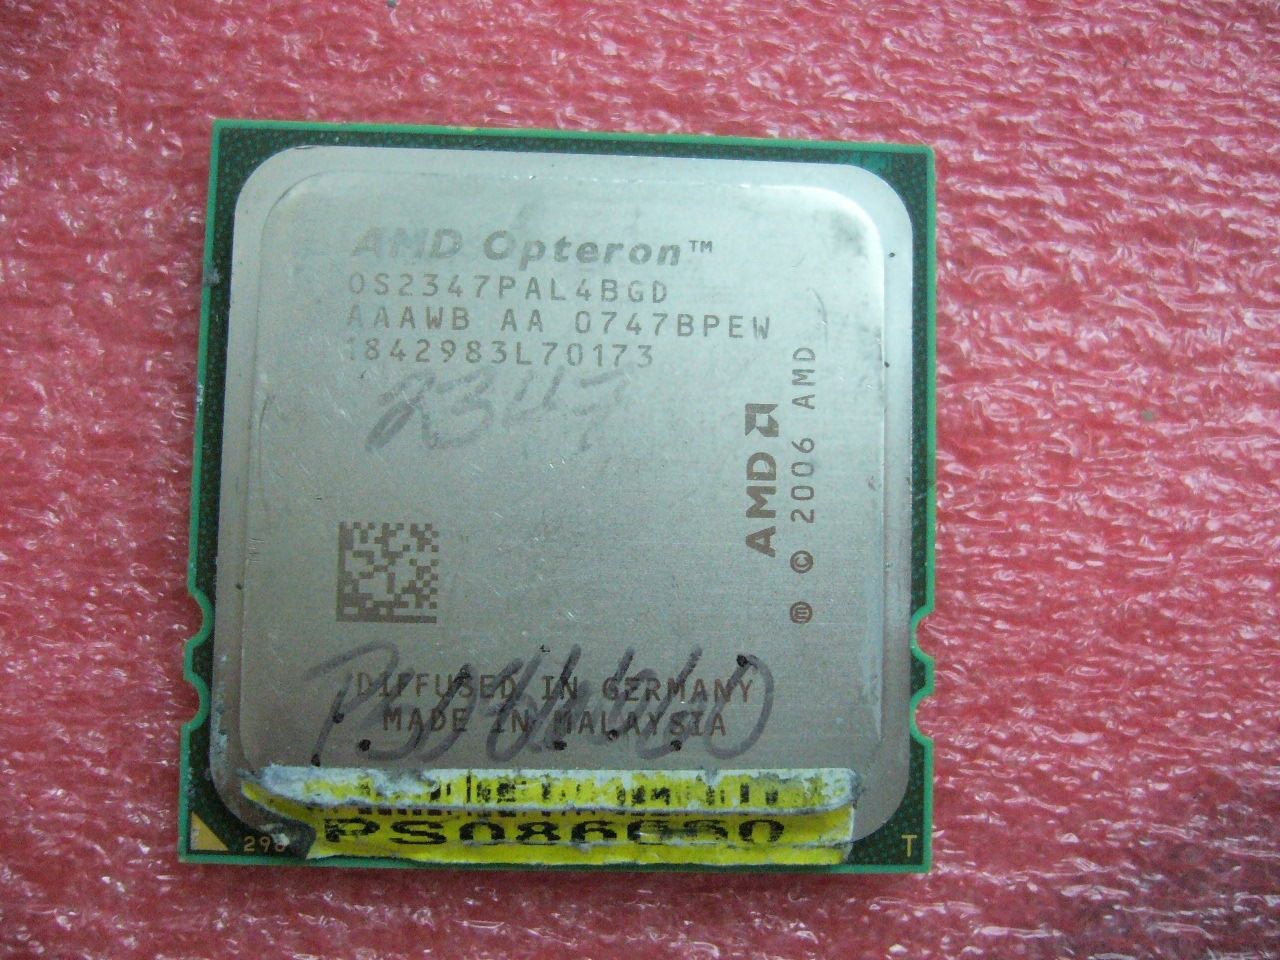 QTY 1x AMD Opteron 2347 HE 1.9 GHz Quad-Core (OS2347PAL4BGD) CPU Socket F 1207